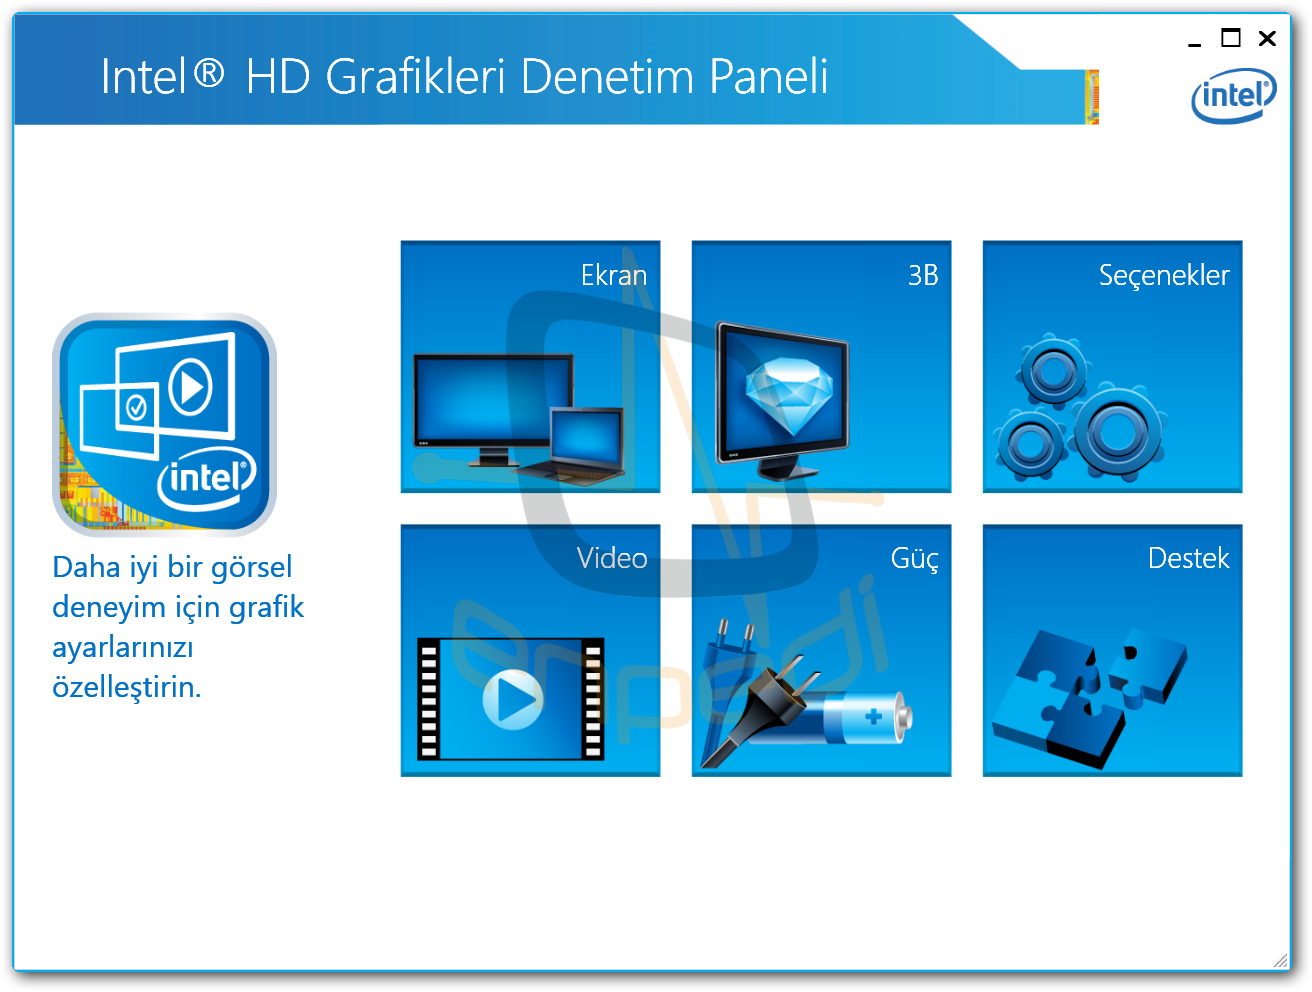 Intel core graphics driver. Панель управления графикой и Медиа Intel. Центр управления графикой Intel. Панель Интел.